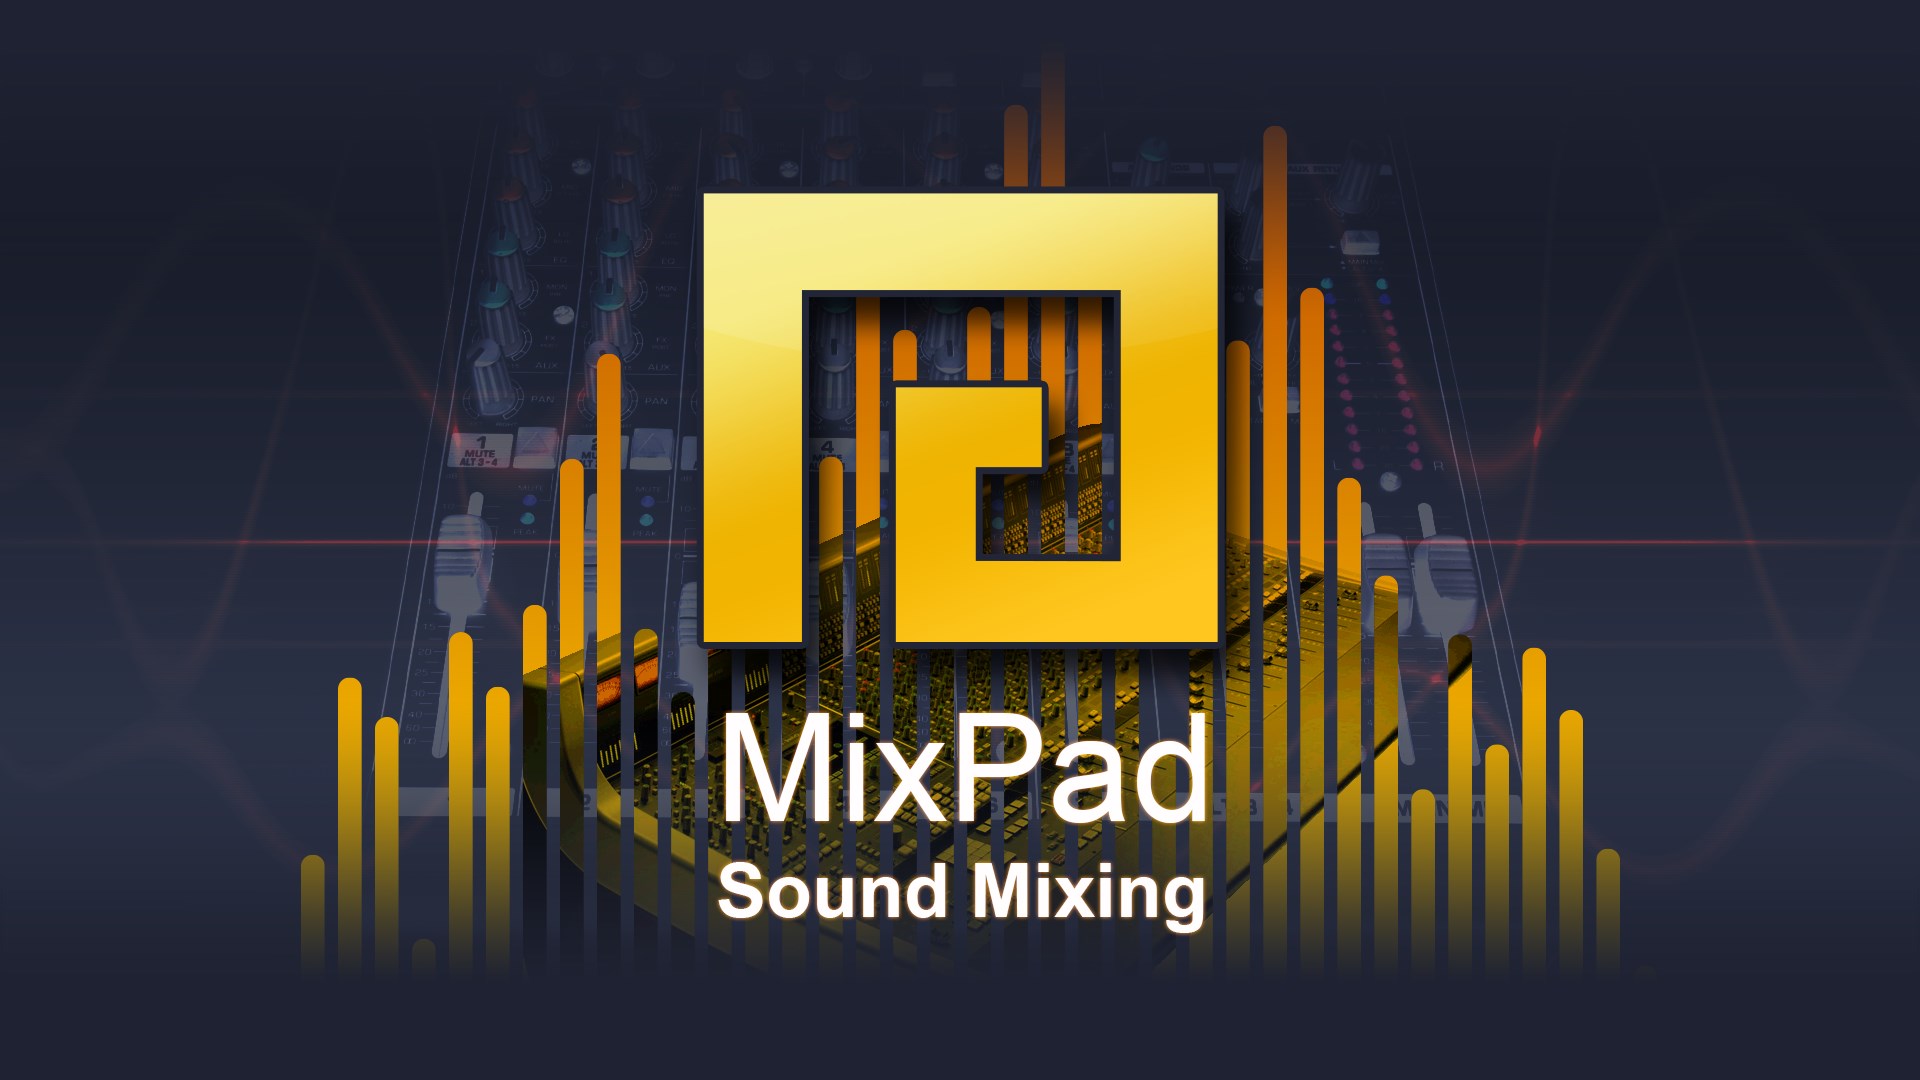 [$ 20.89] NCH: MixPad Multitrack Recording Key